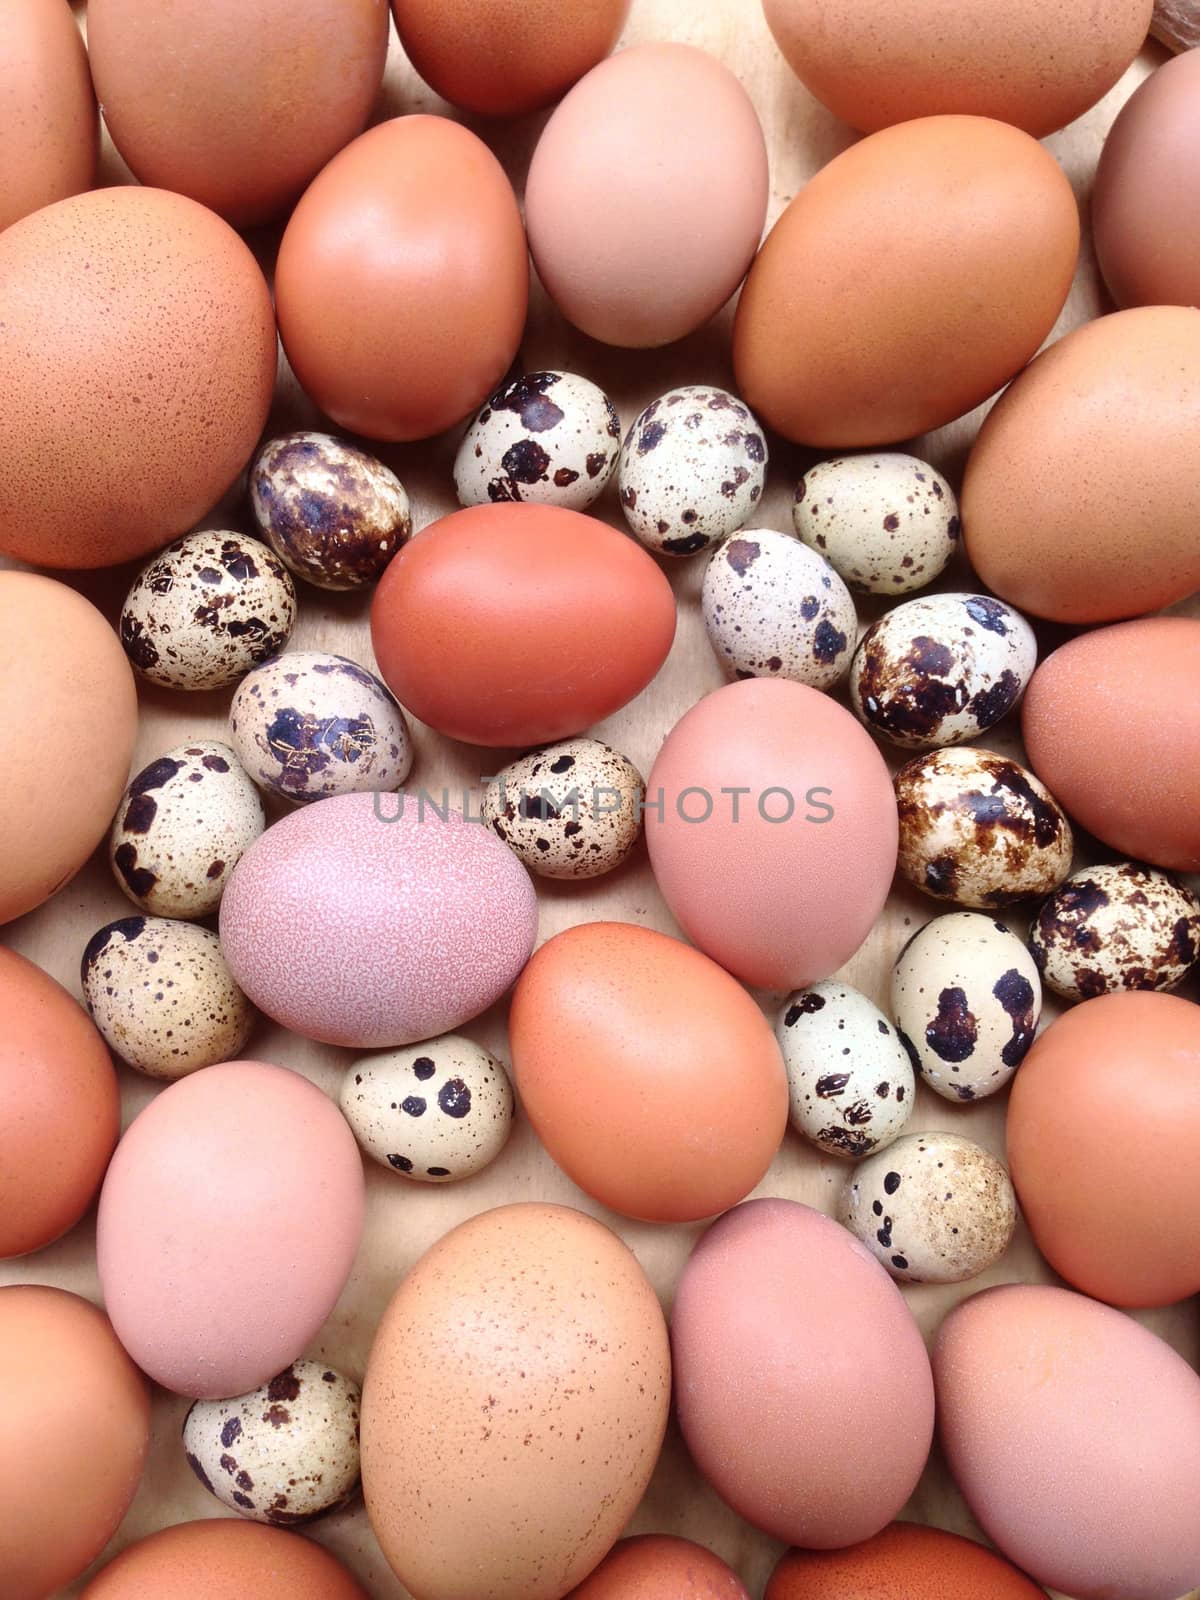 Chicken eggs and Quail eggs by Bowonpat